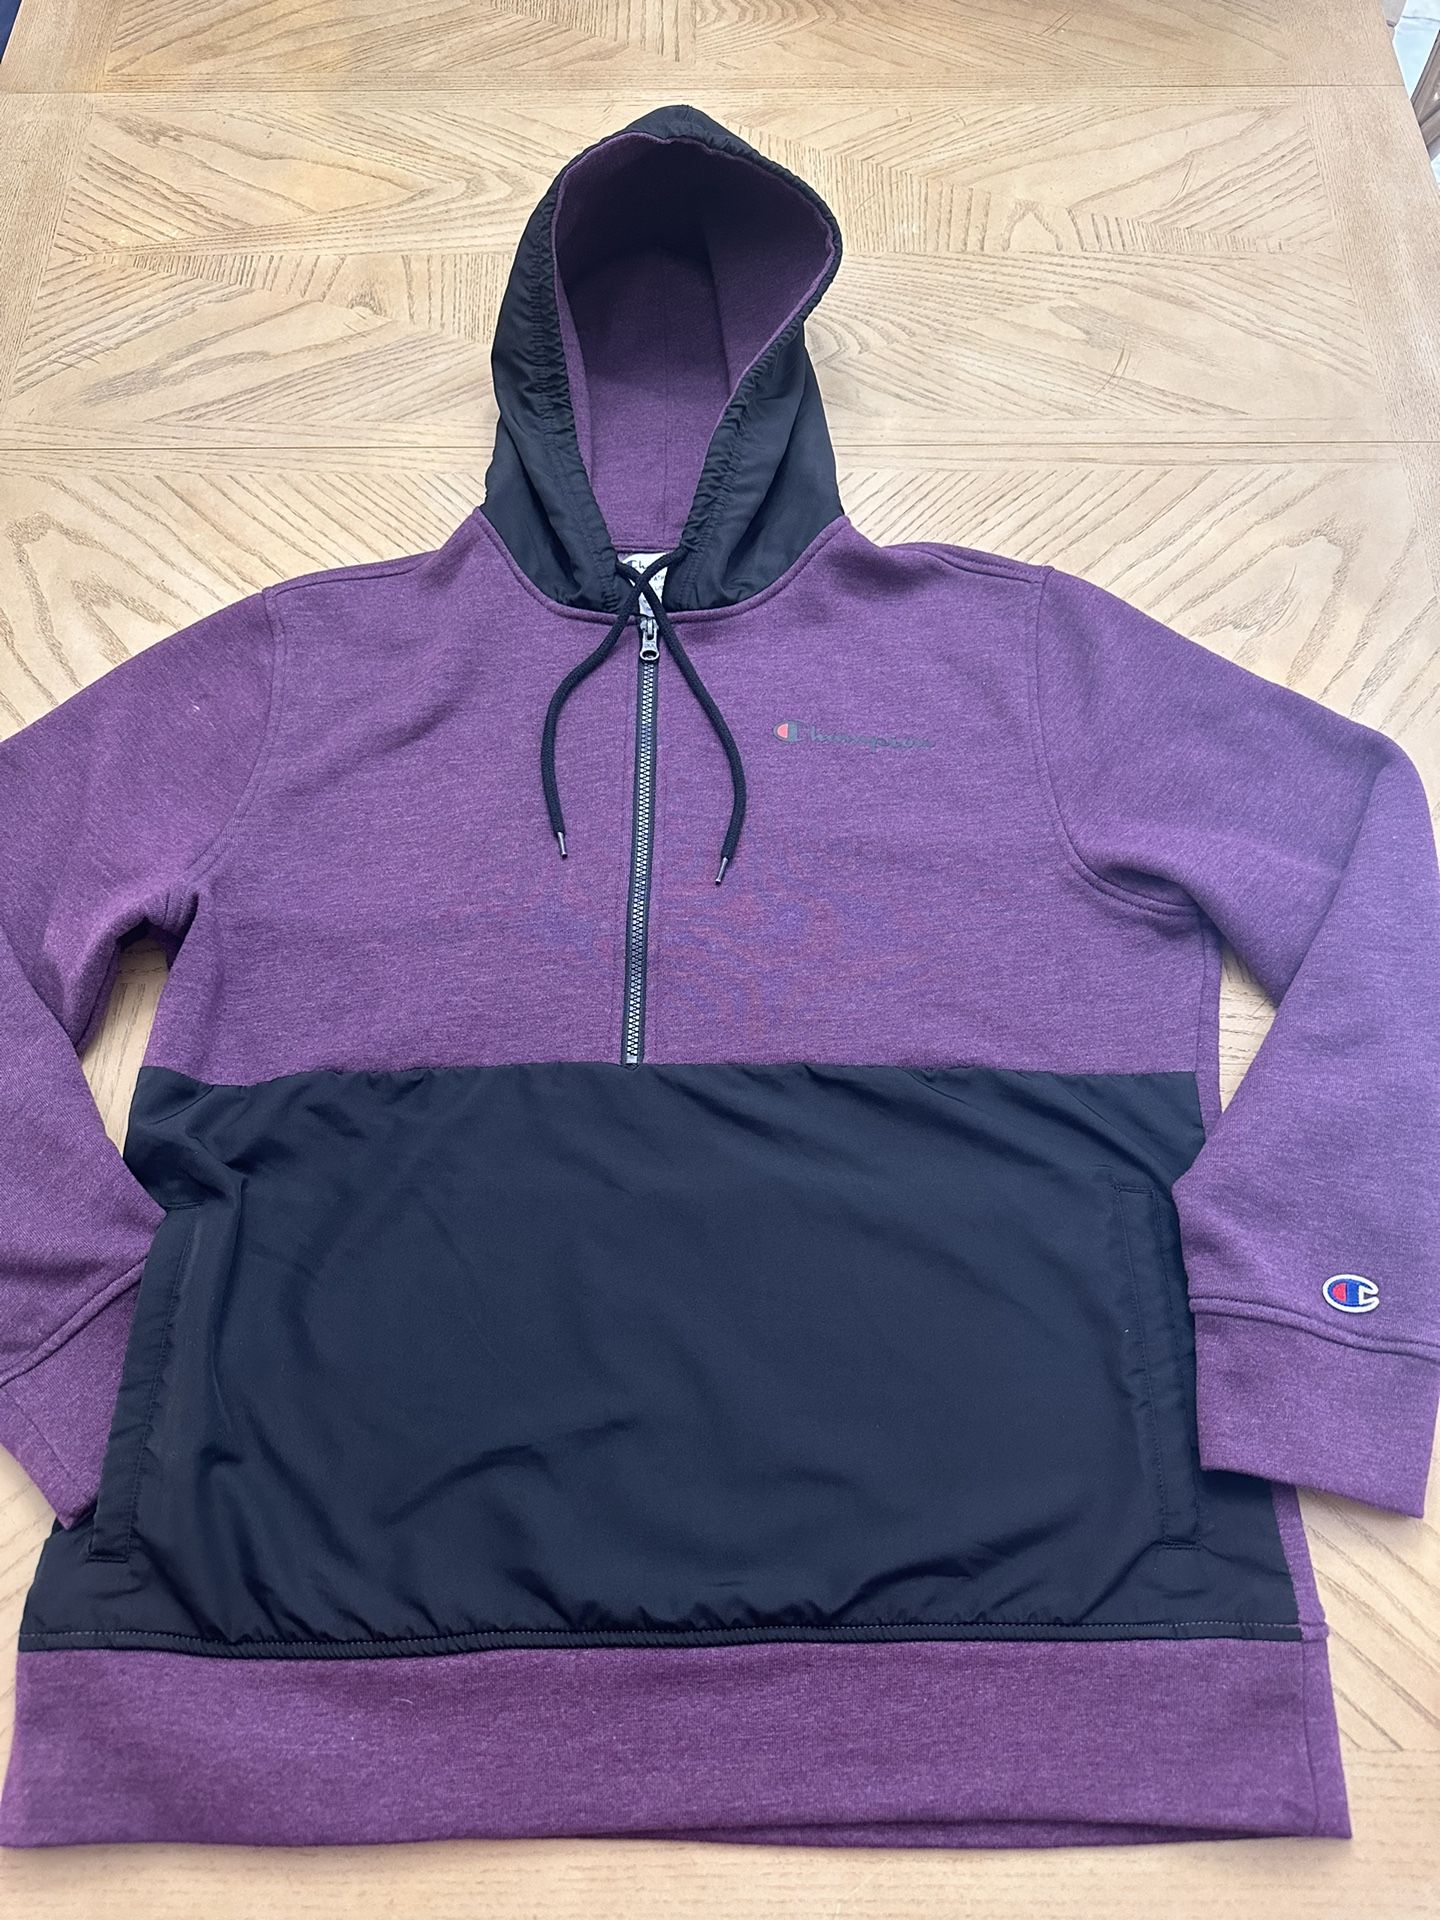 Champion Men’s Size Large  Pullover Lightweight Hoodie Sweatshirt Maroon Purple